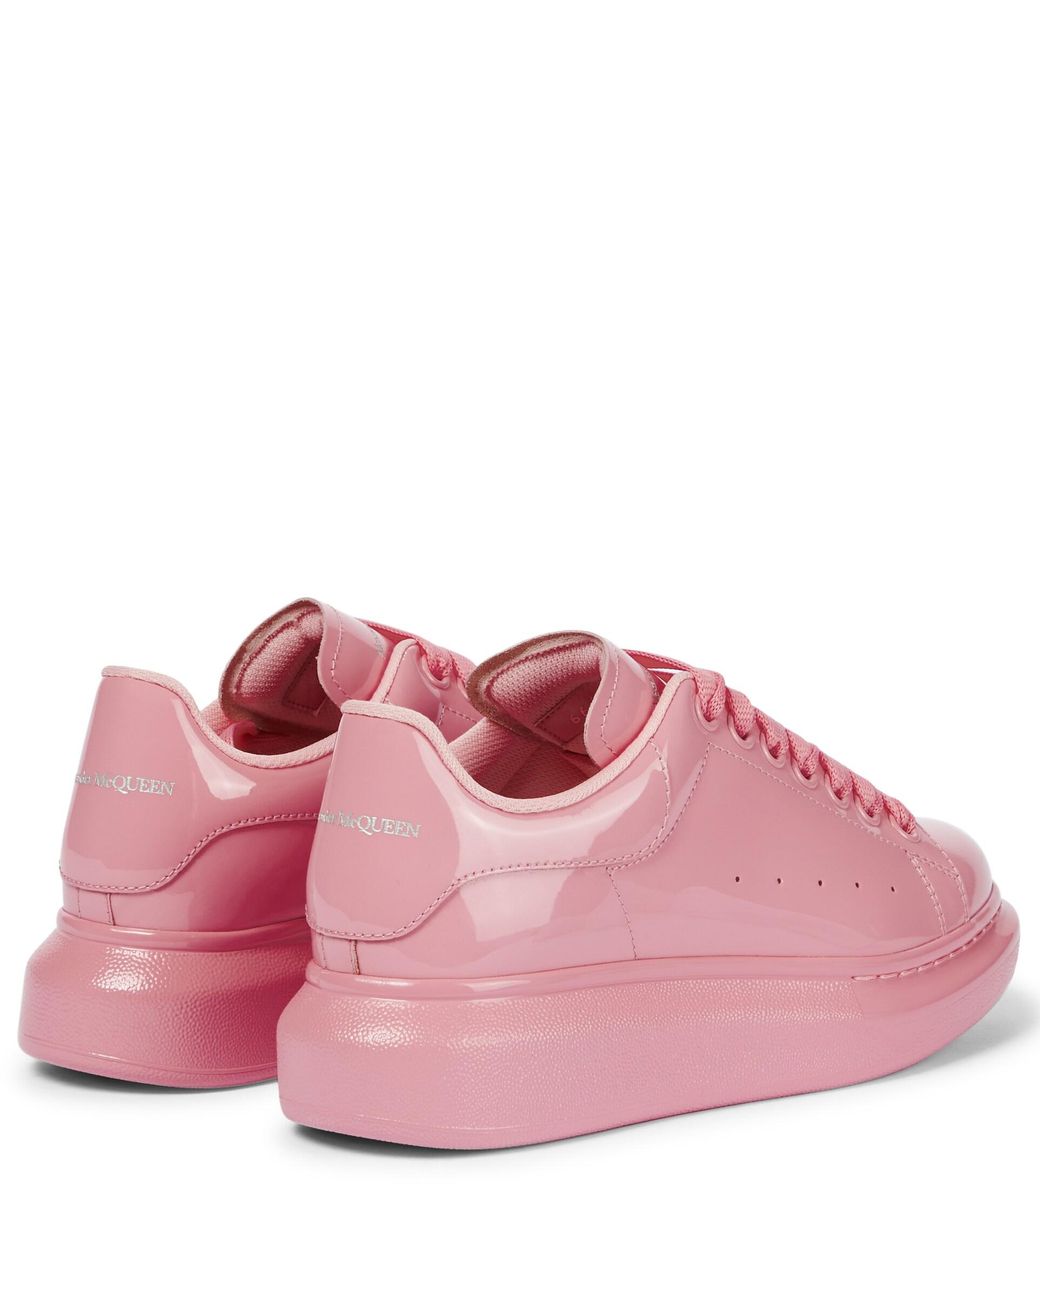 alexander mcqueen pink Oversized Patent Leather Sneakers